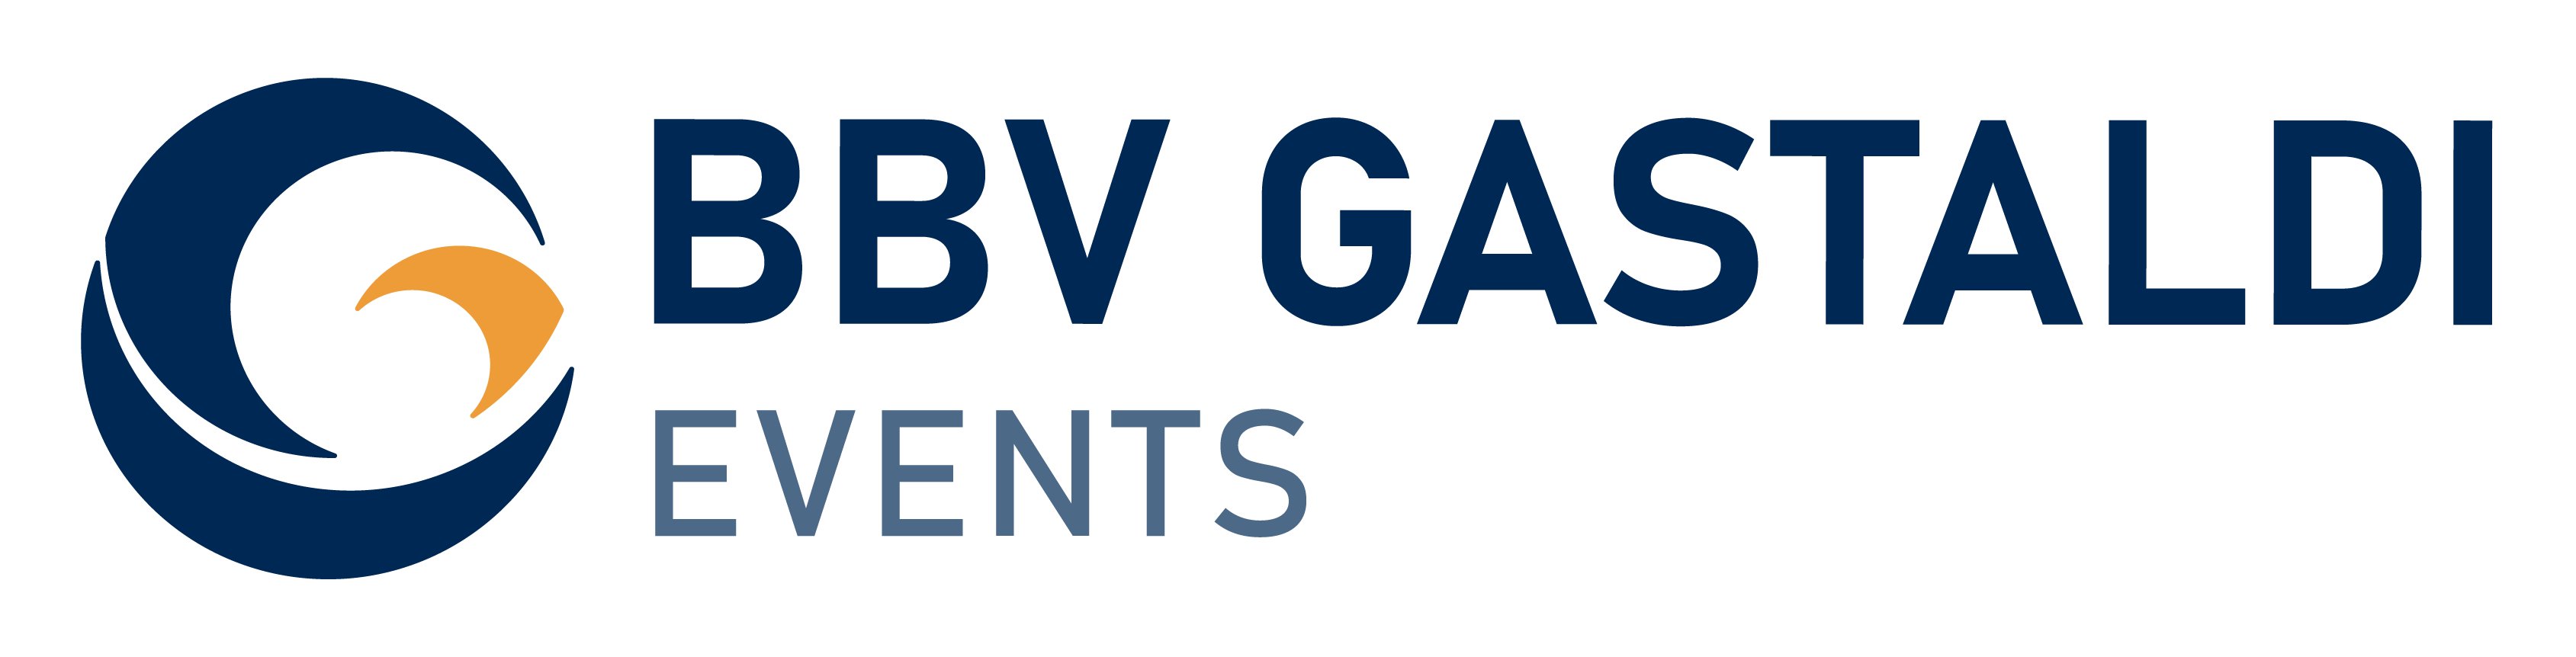 BBV Gastaldi Events